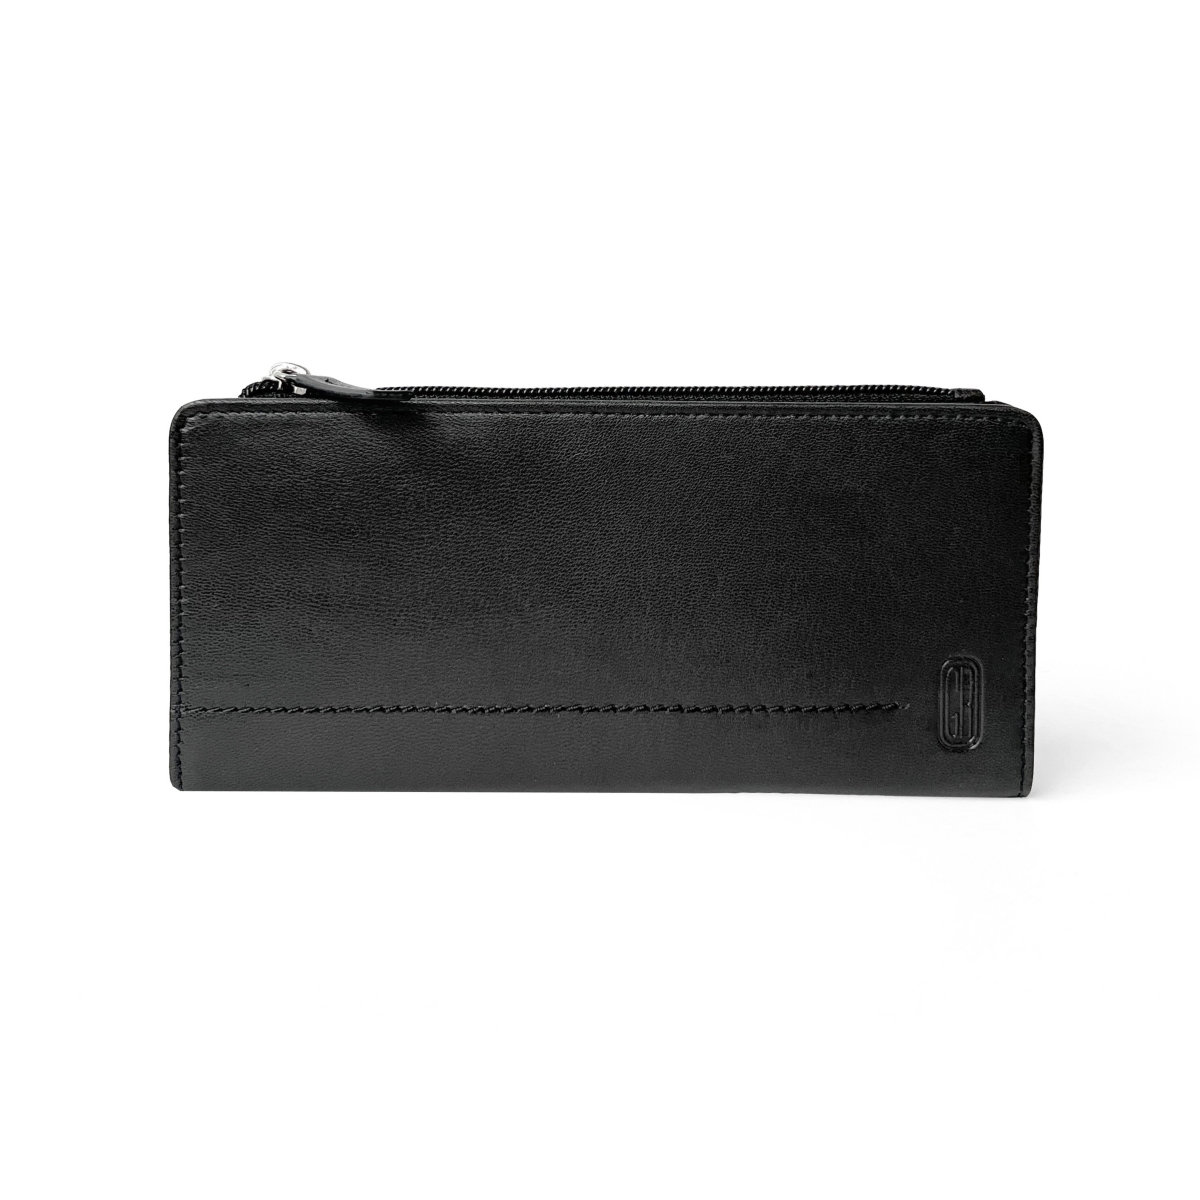 Ladies Slim Clutch Wallet with Top Zipper - Brown